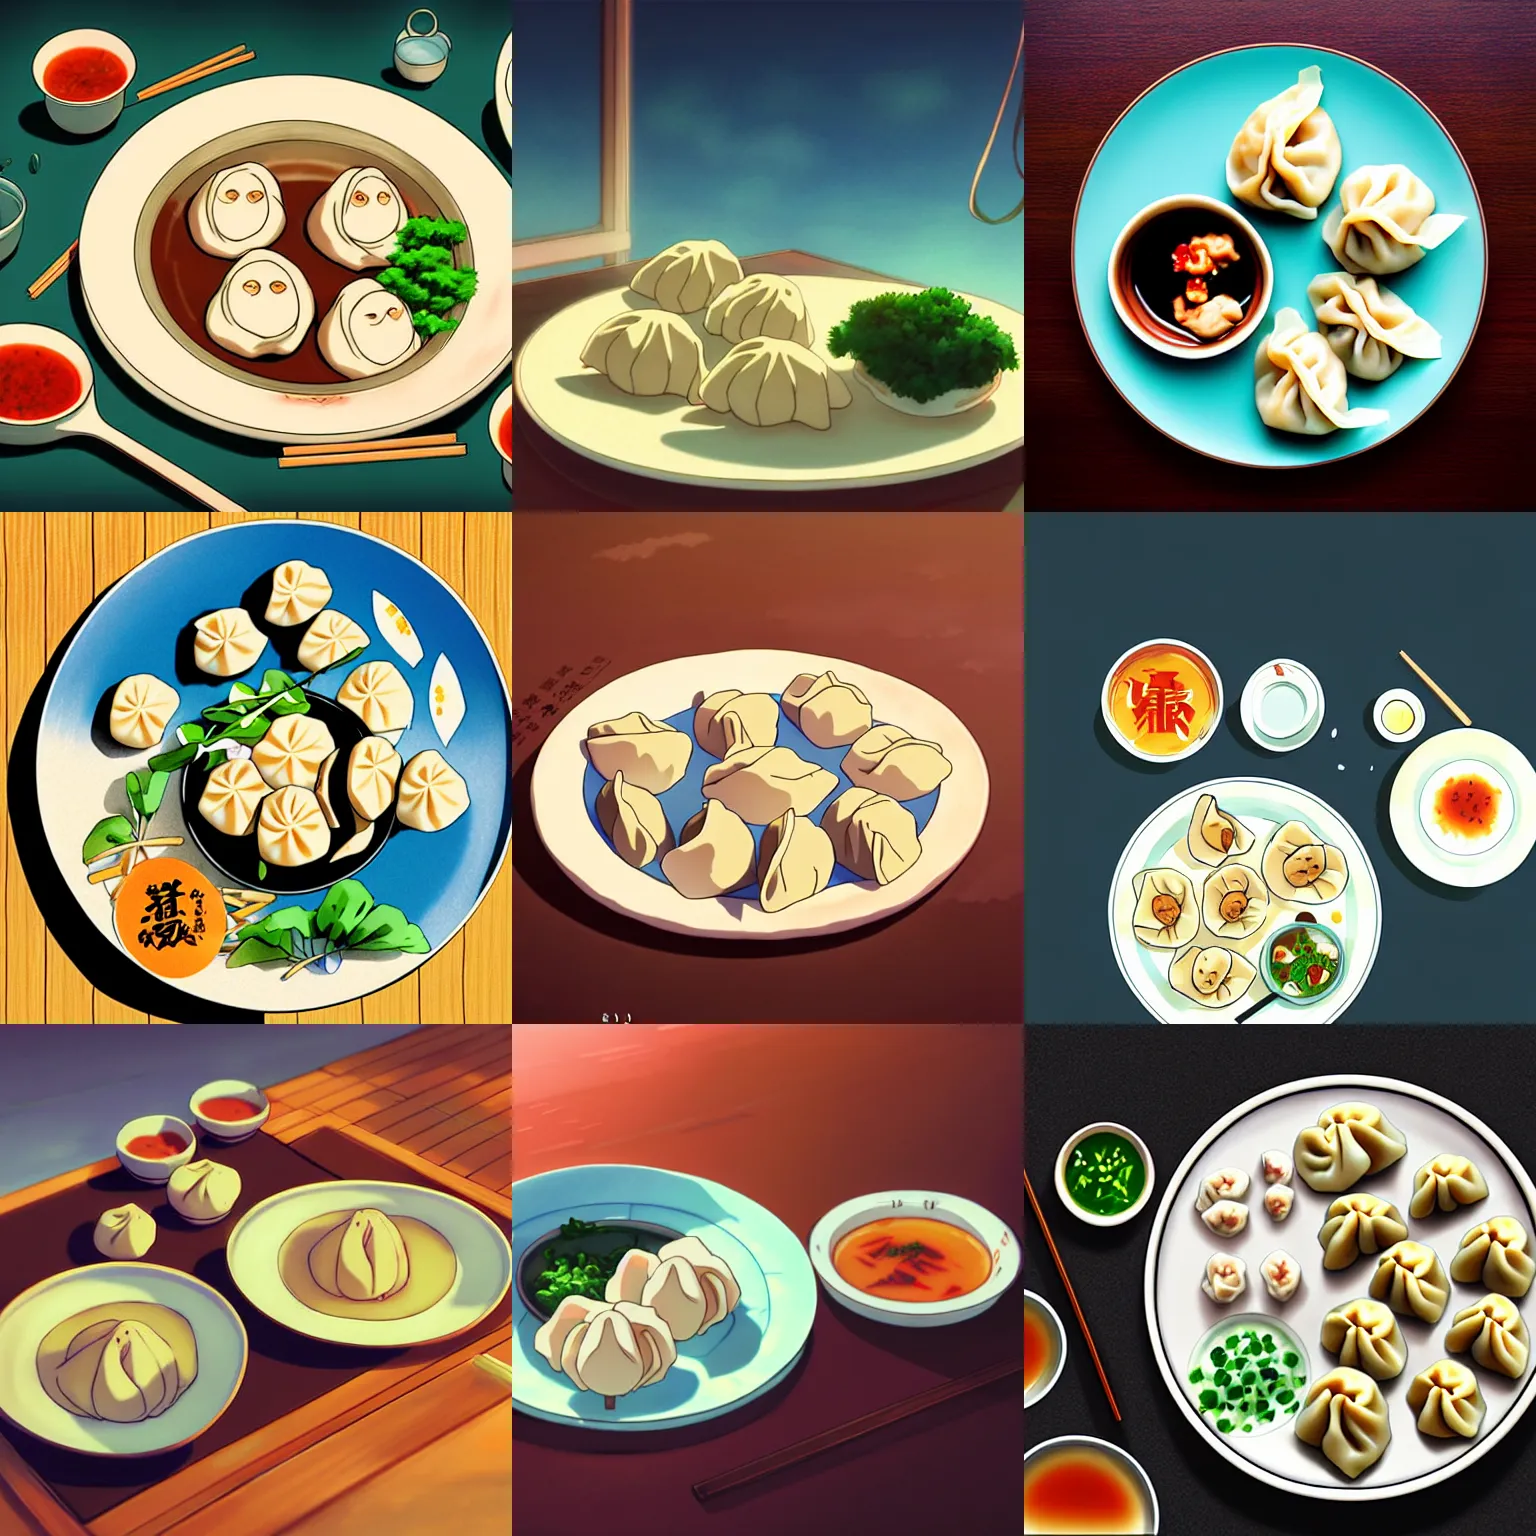 Prompt: dumplings on a plate, digital art, illustrations, by makoto shinkai and studio ghibli